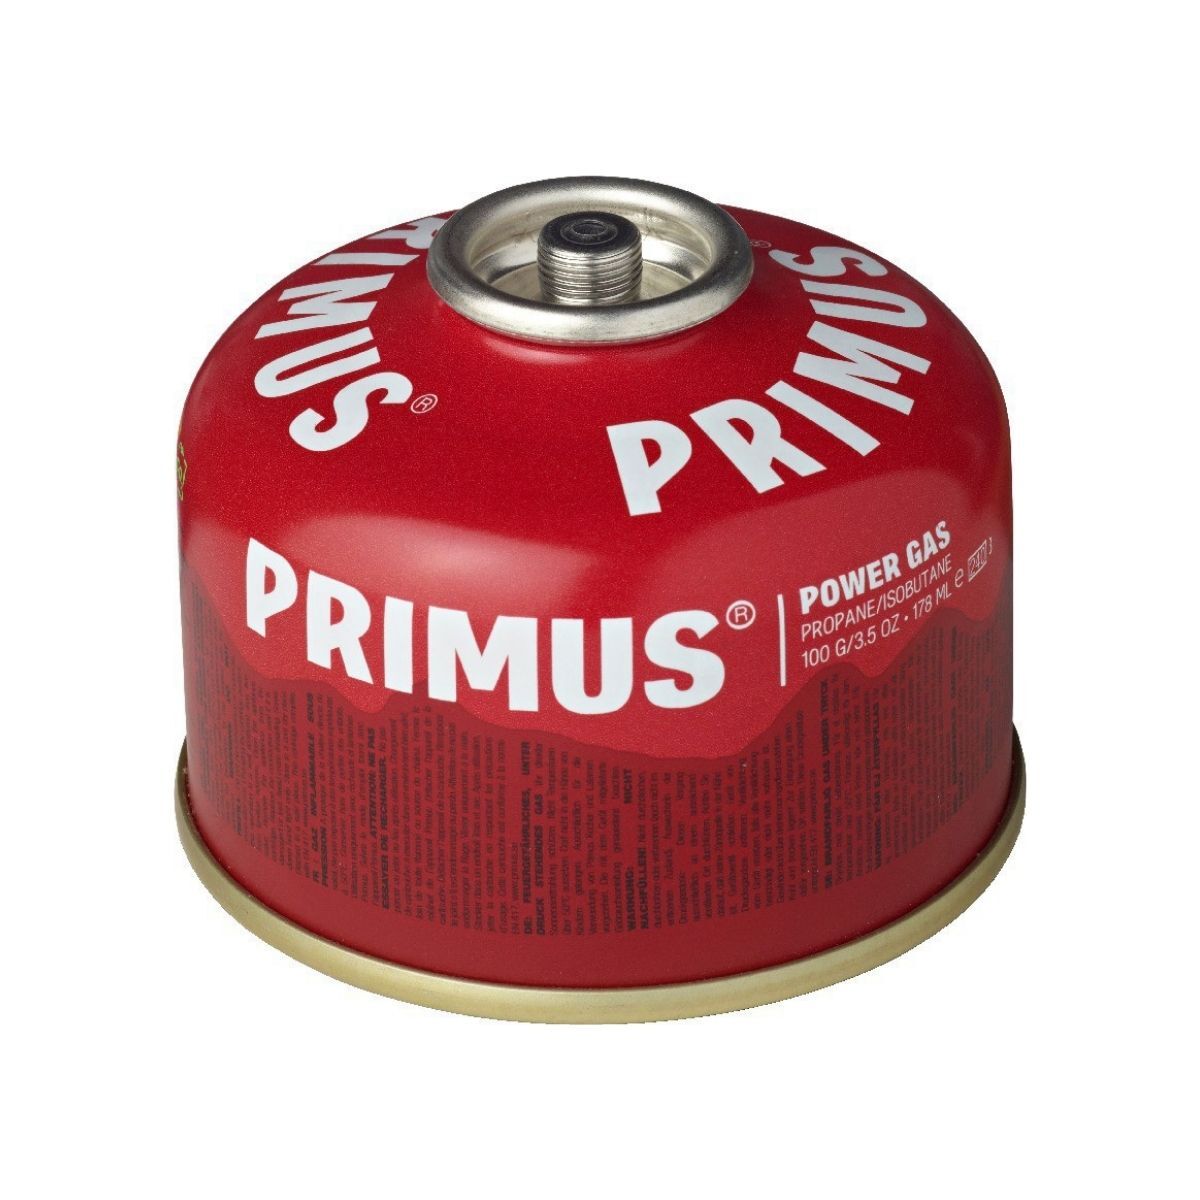 Primus Power Gas 100 g L1 - Gaspatron